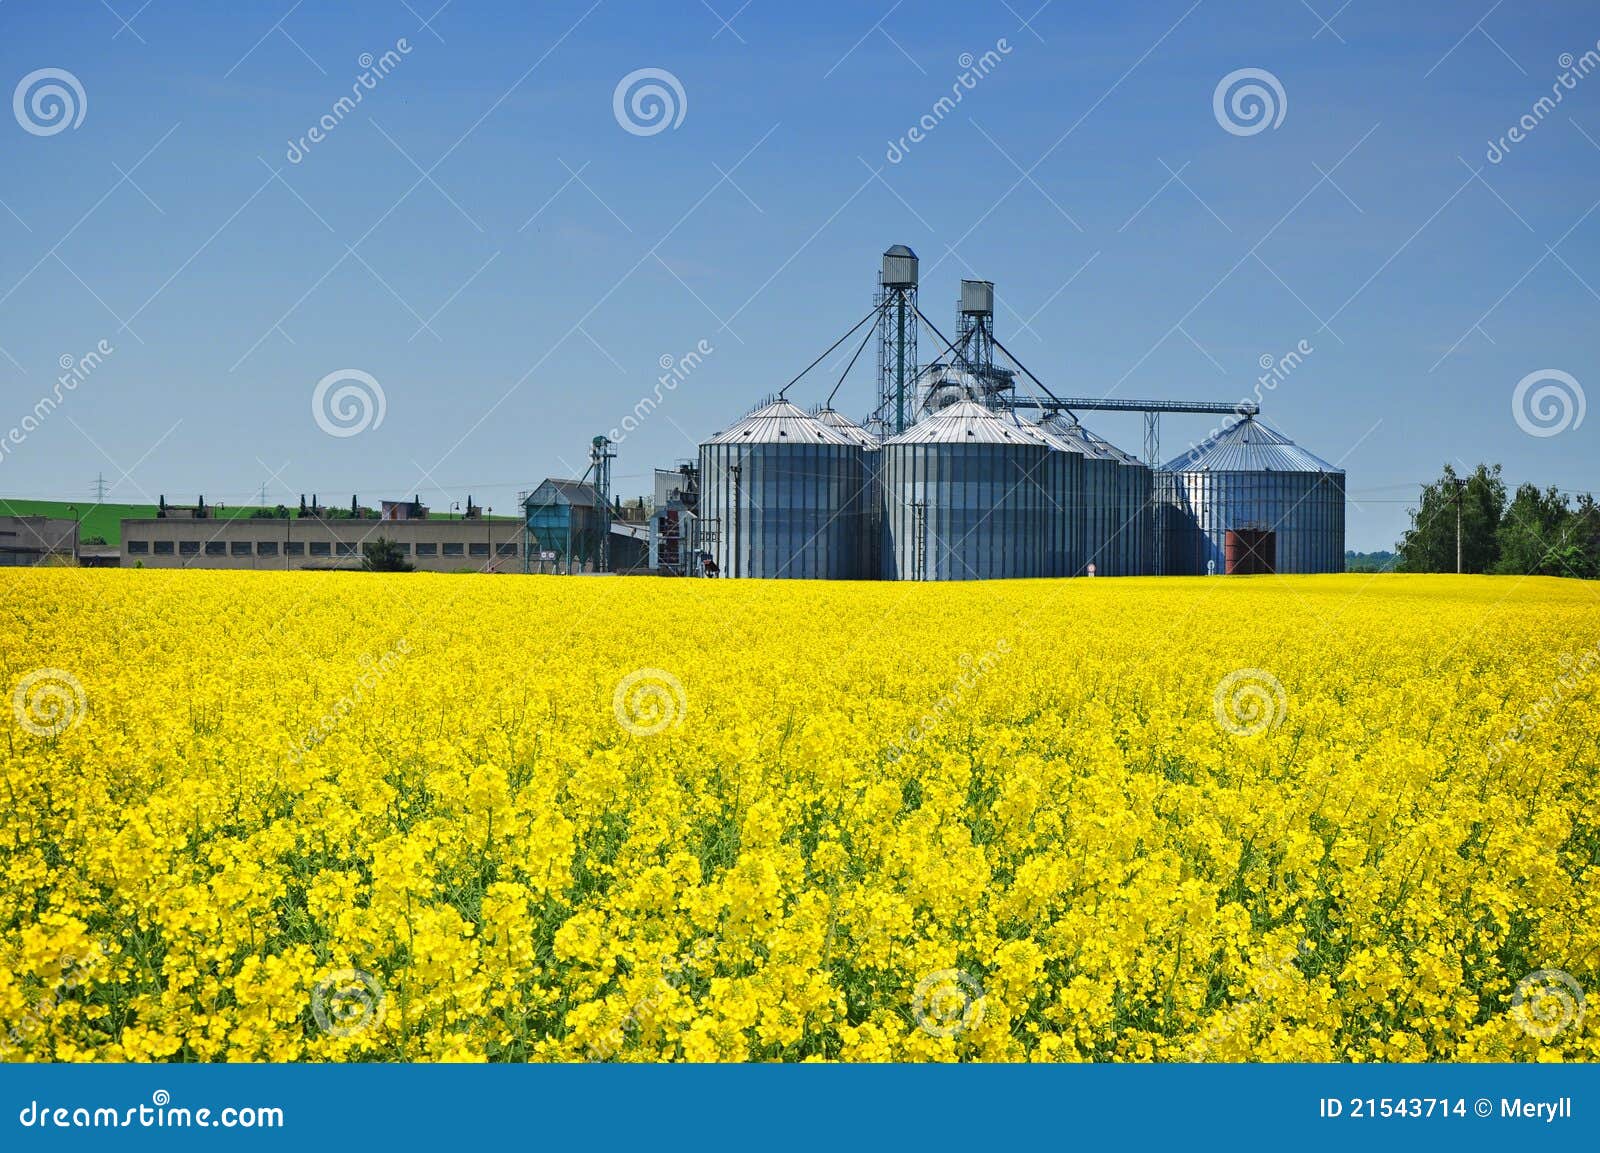 agriculture farm silo